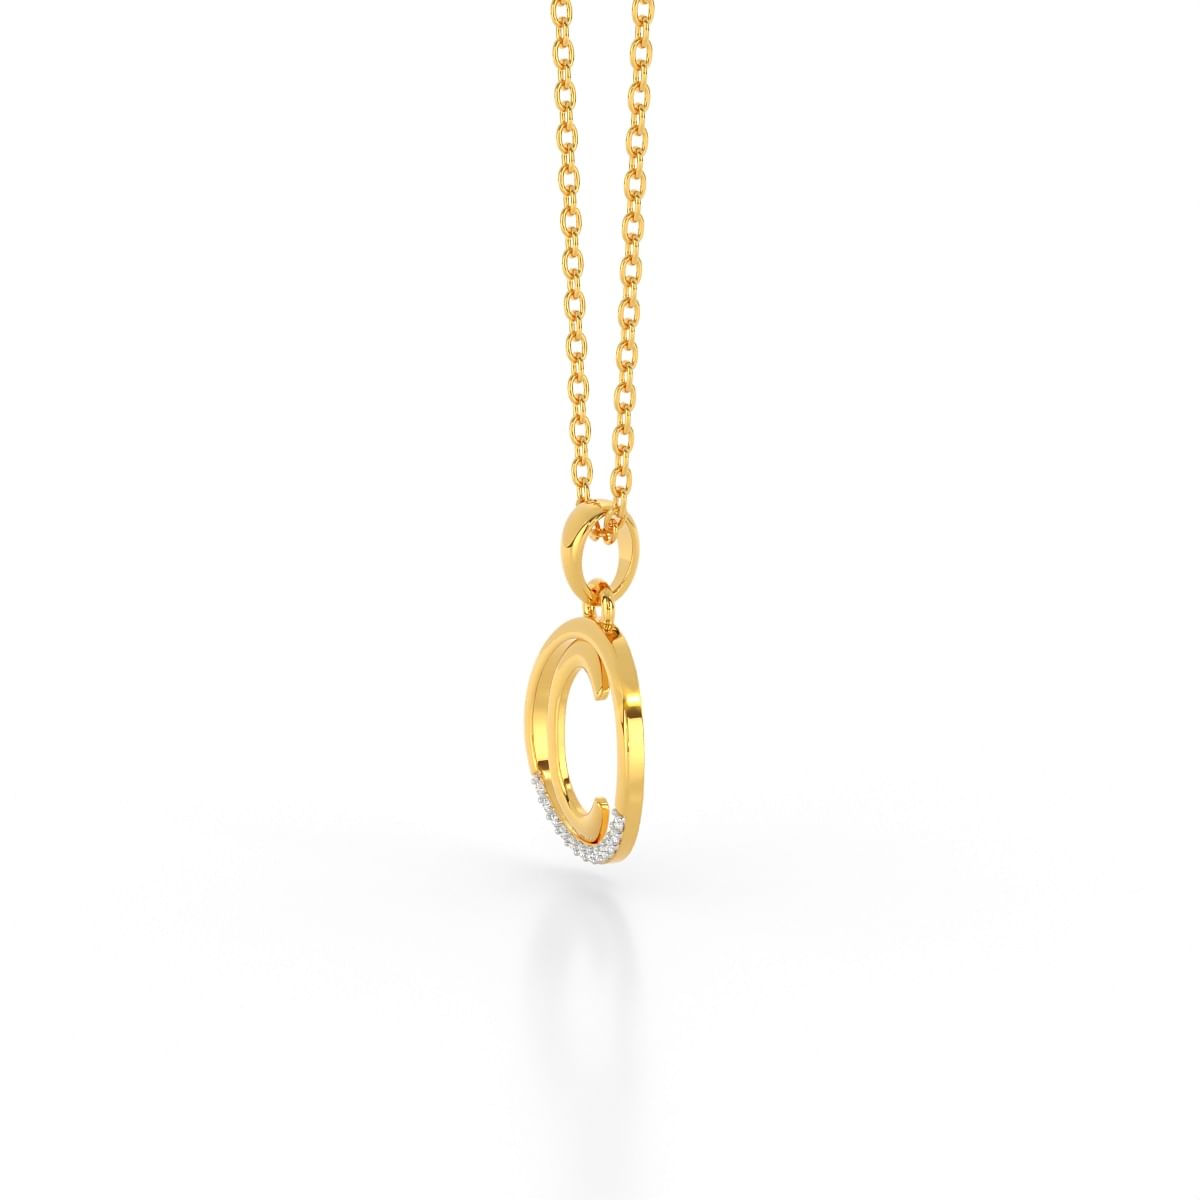 3 Carat Diamond Necklace | Diamond Pendant Necklace | Moissanite Necklace  Gold - 18k - Aliexpress